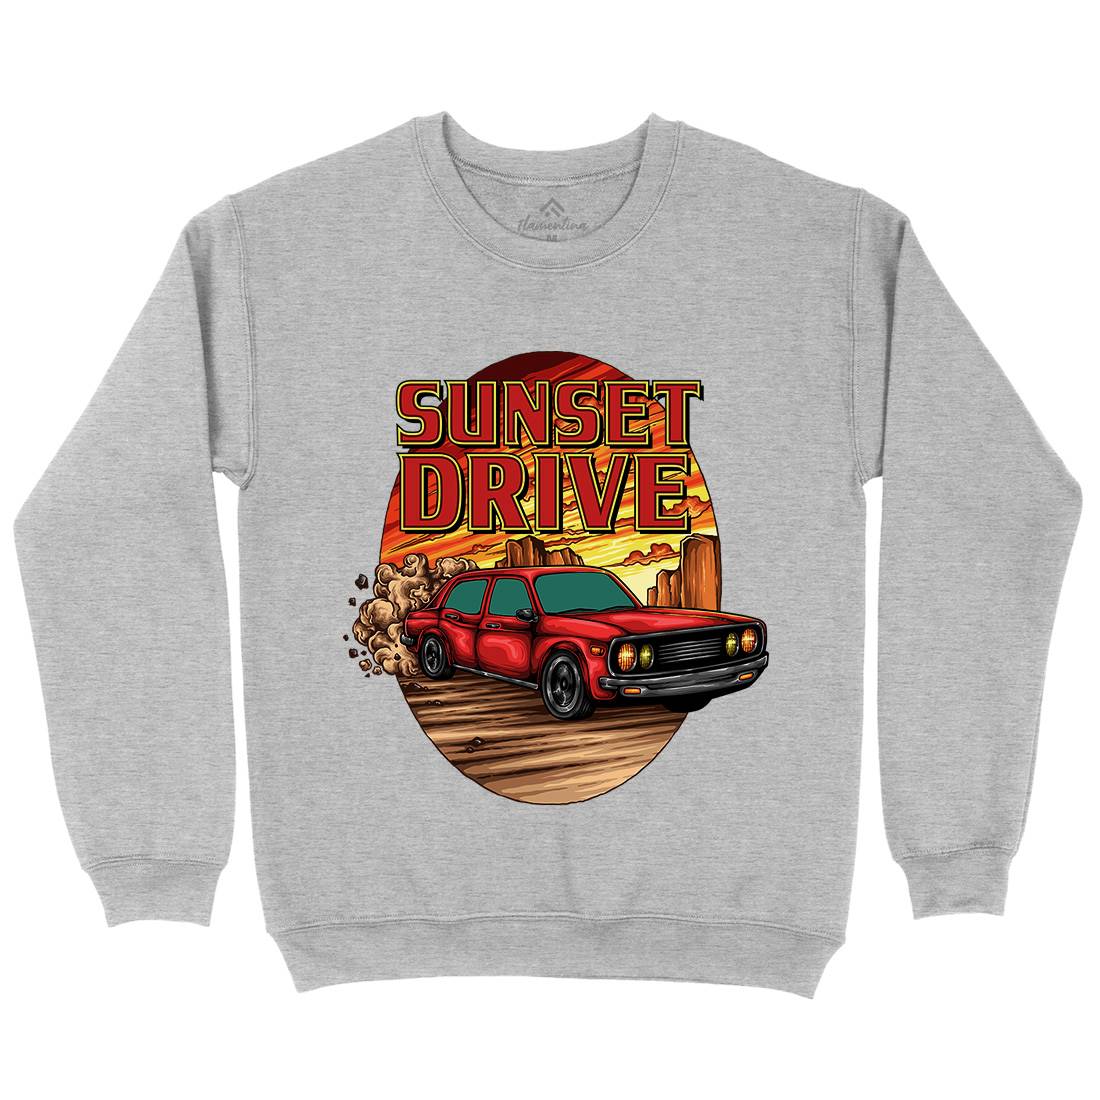 Sunset Drive Kids Crew Neck Sweatshirt Cars A472